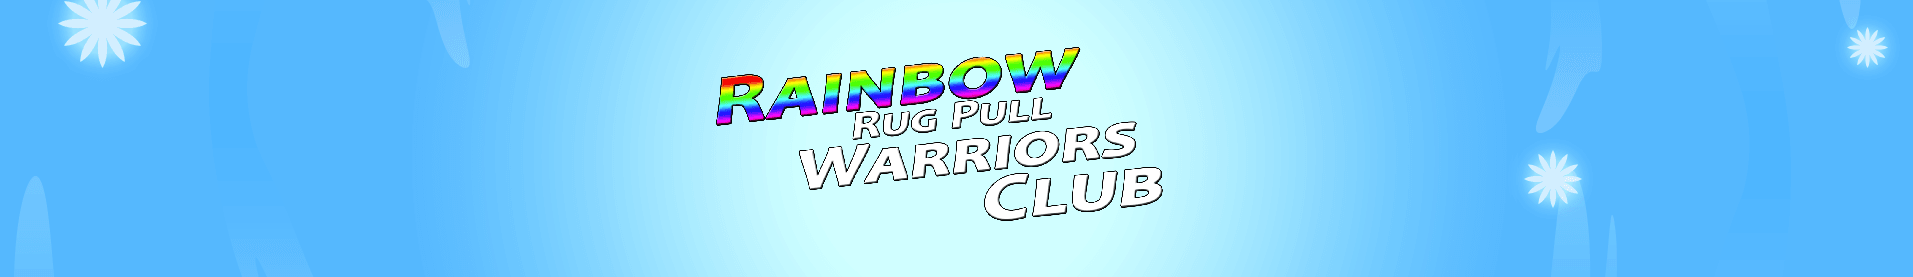 Rainbow_Rug_Pull_Warriors_Club bannière